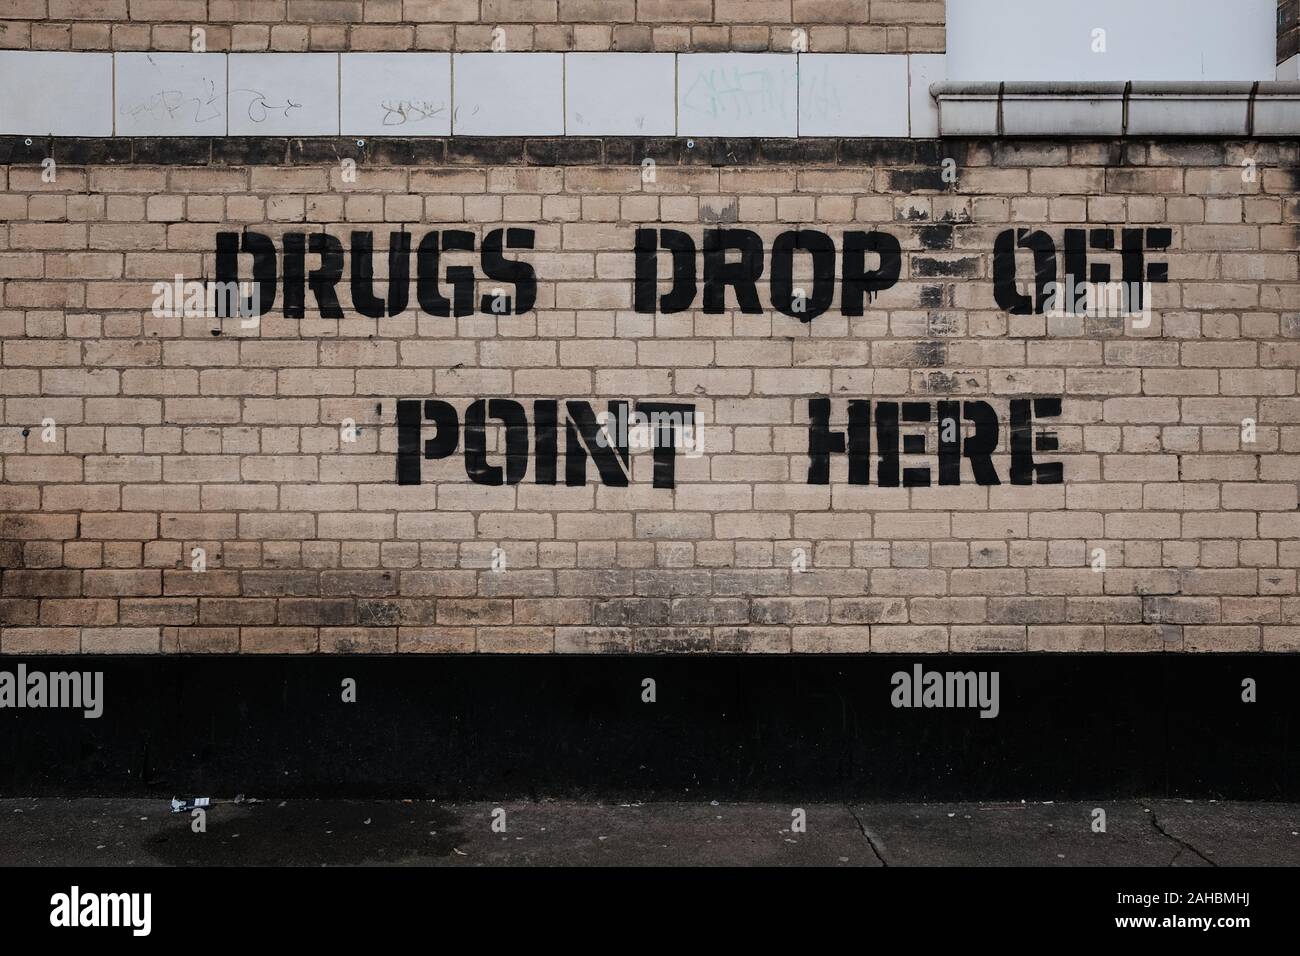 Drug dealing graffiti on a wall Stock Photo